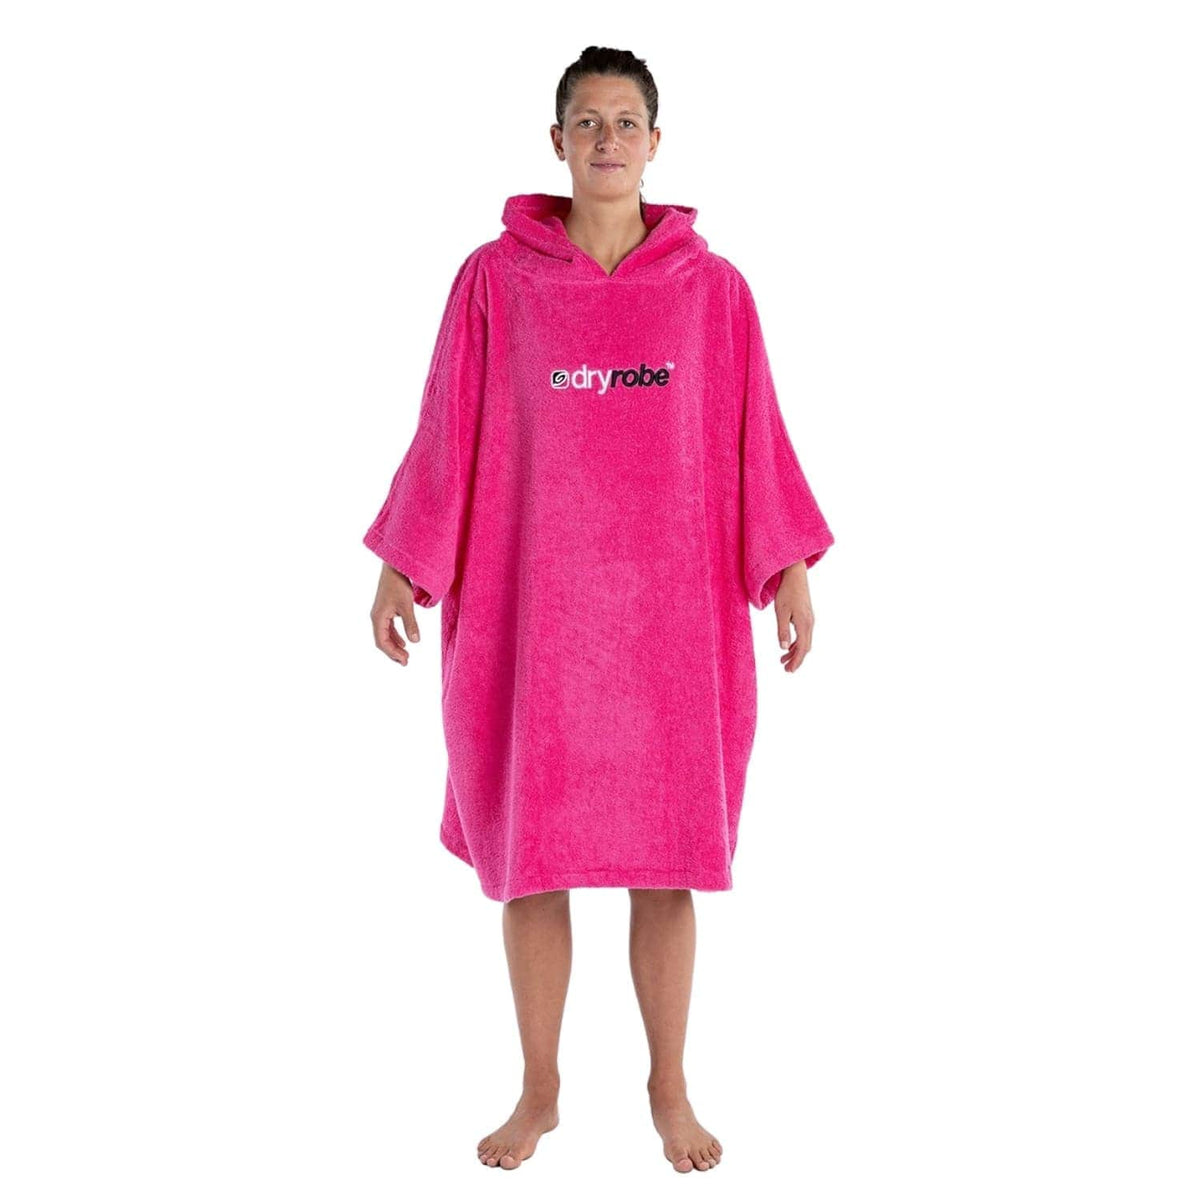 DryRobe Organic Cotton Short Sleeve Towel Dryrobe - Pink - Changing Robe Poncho Towel by Dryrobe